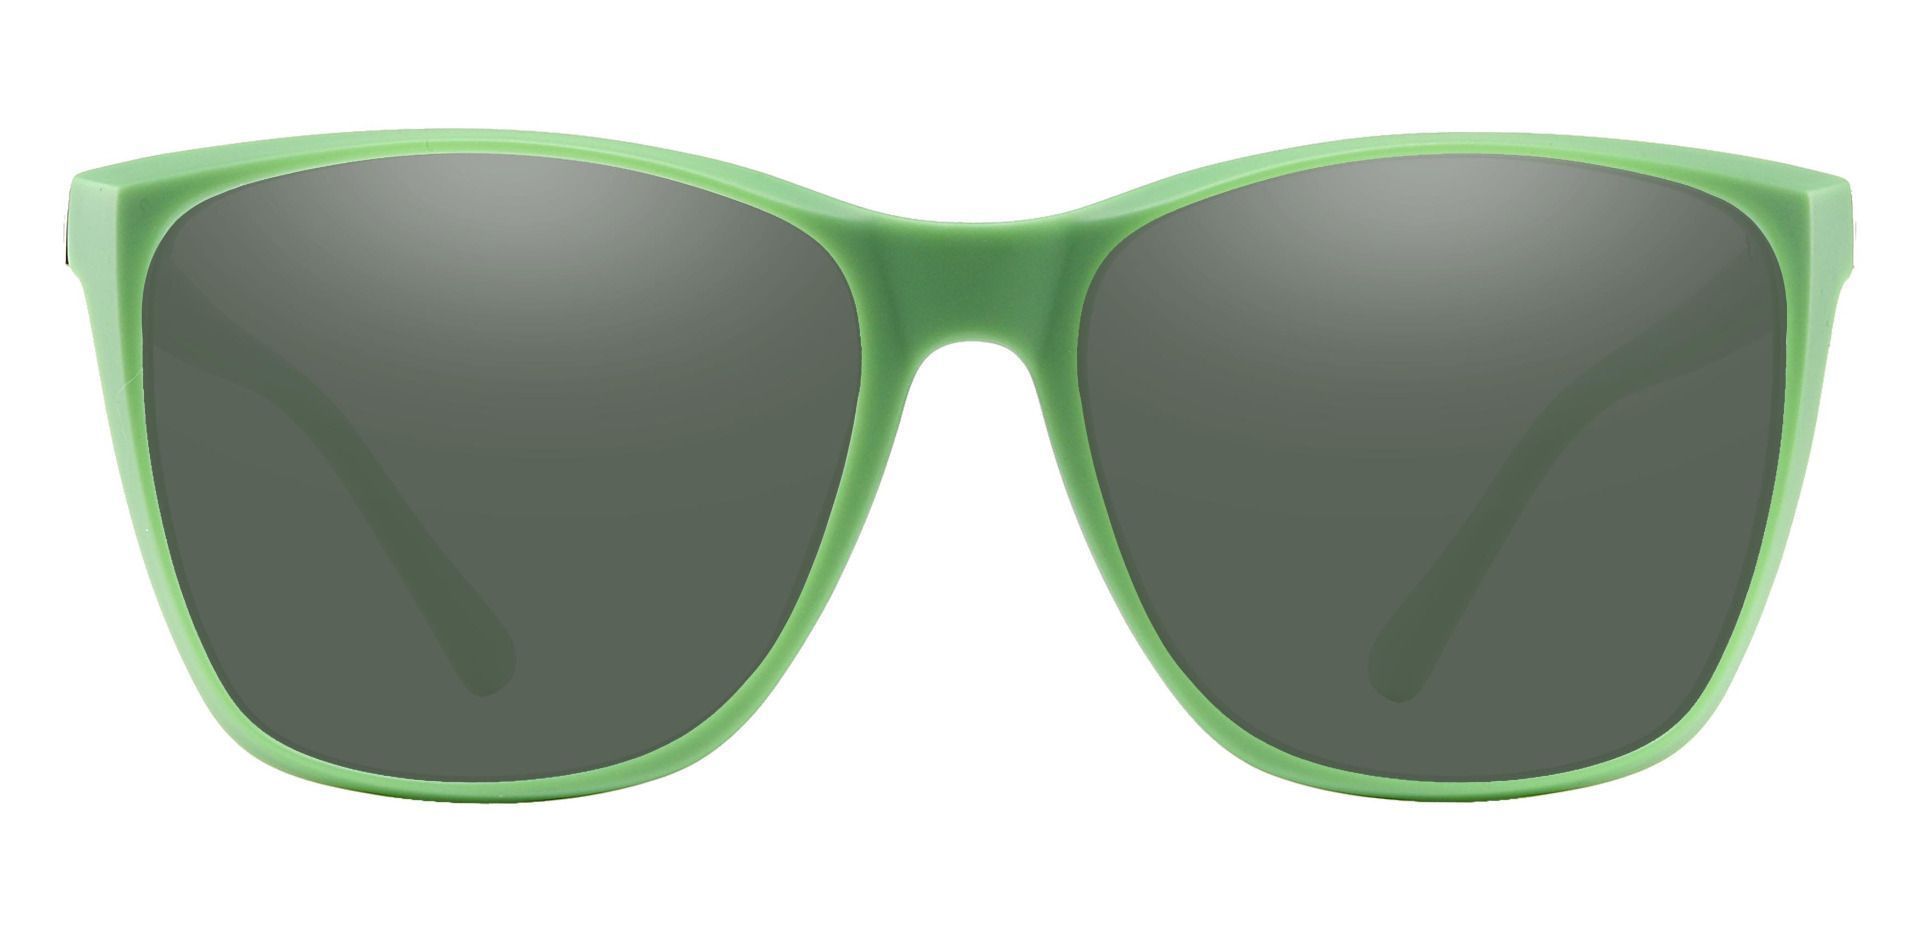 Hickory Square Progressive Sunglasses - Green Frame With Green Lenses